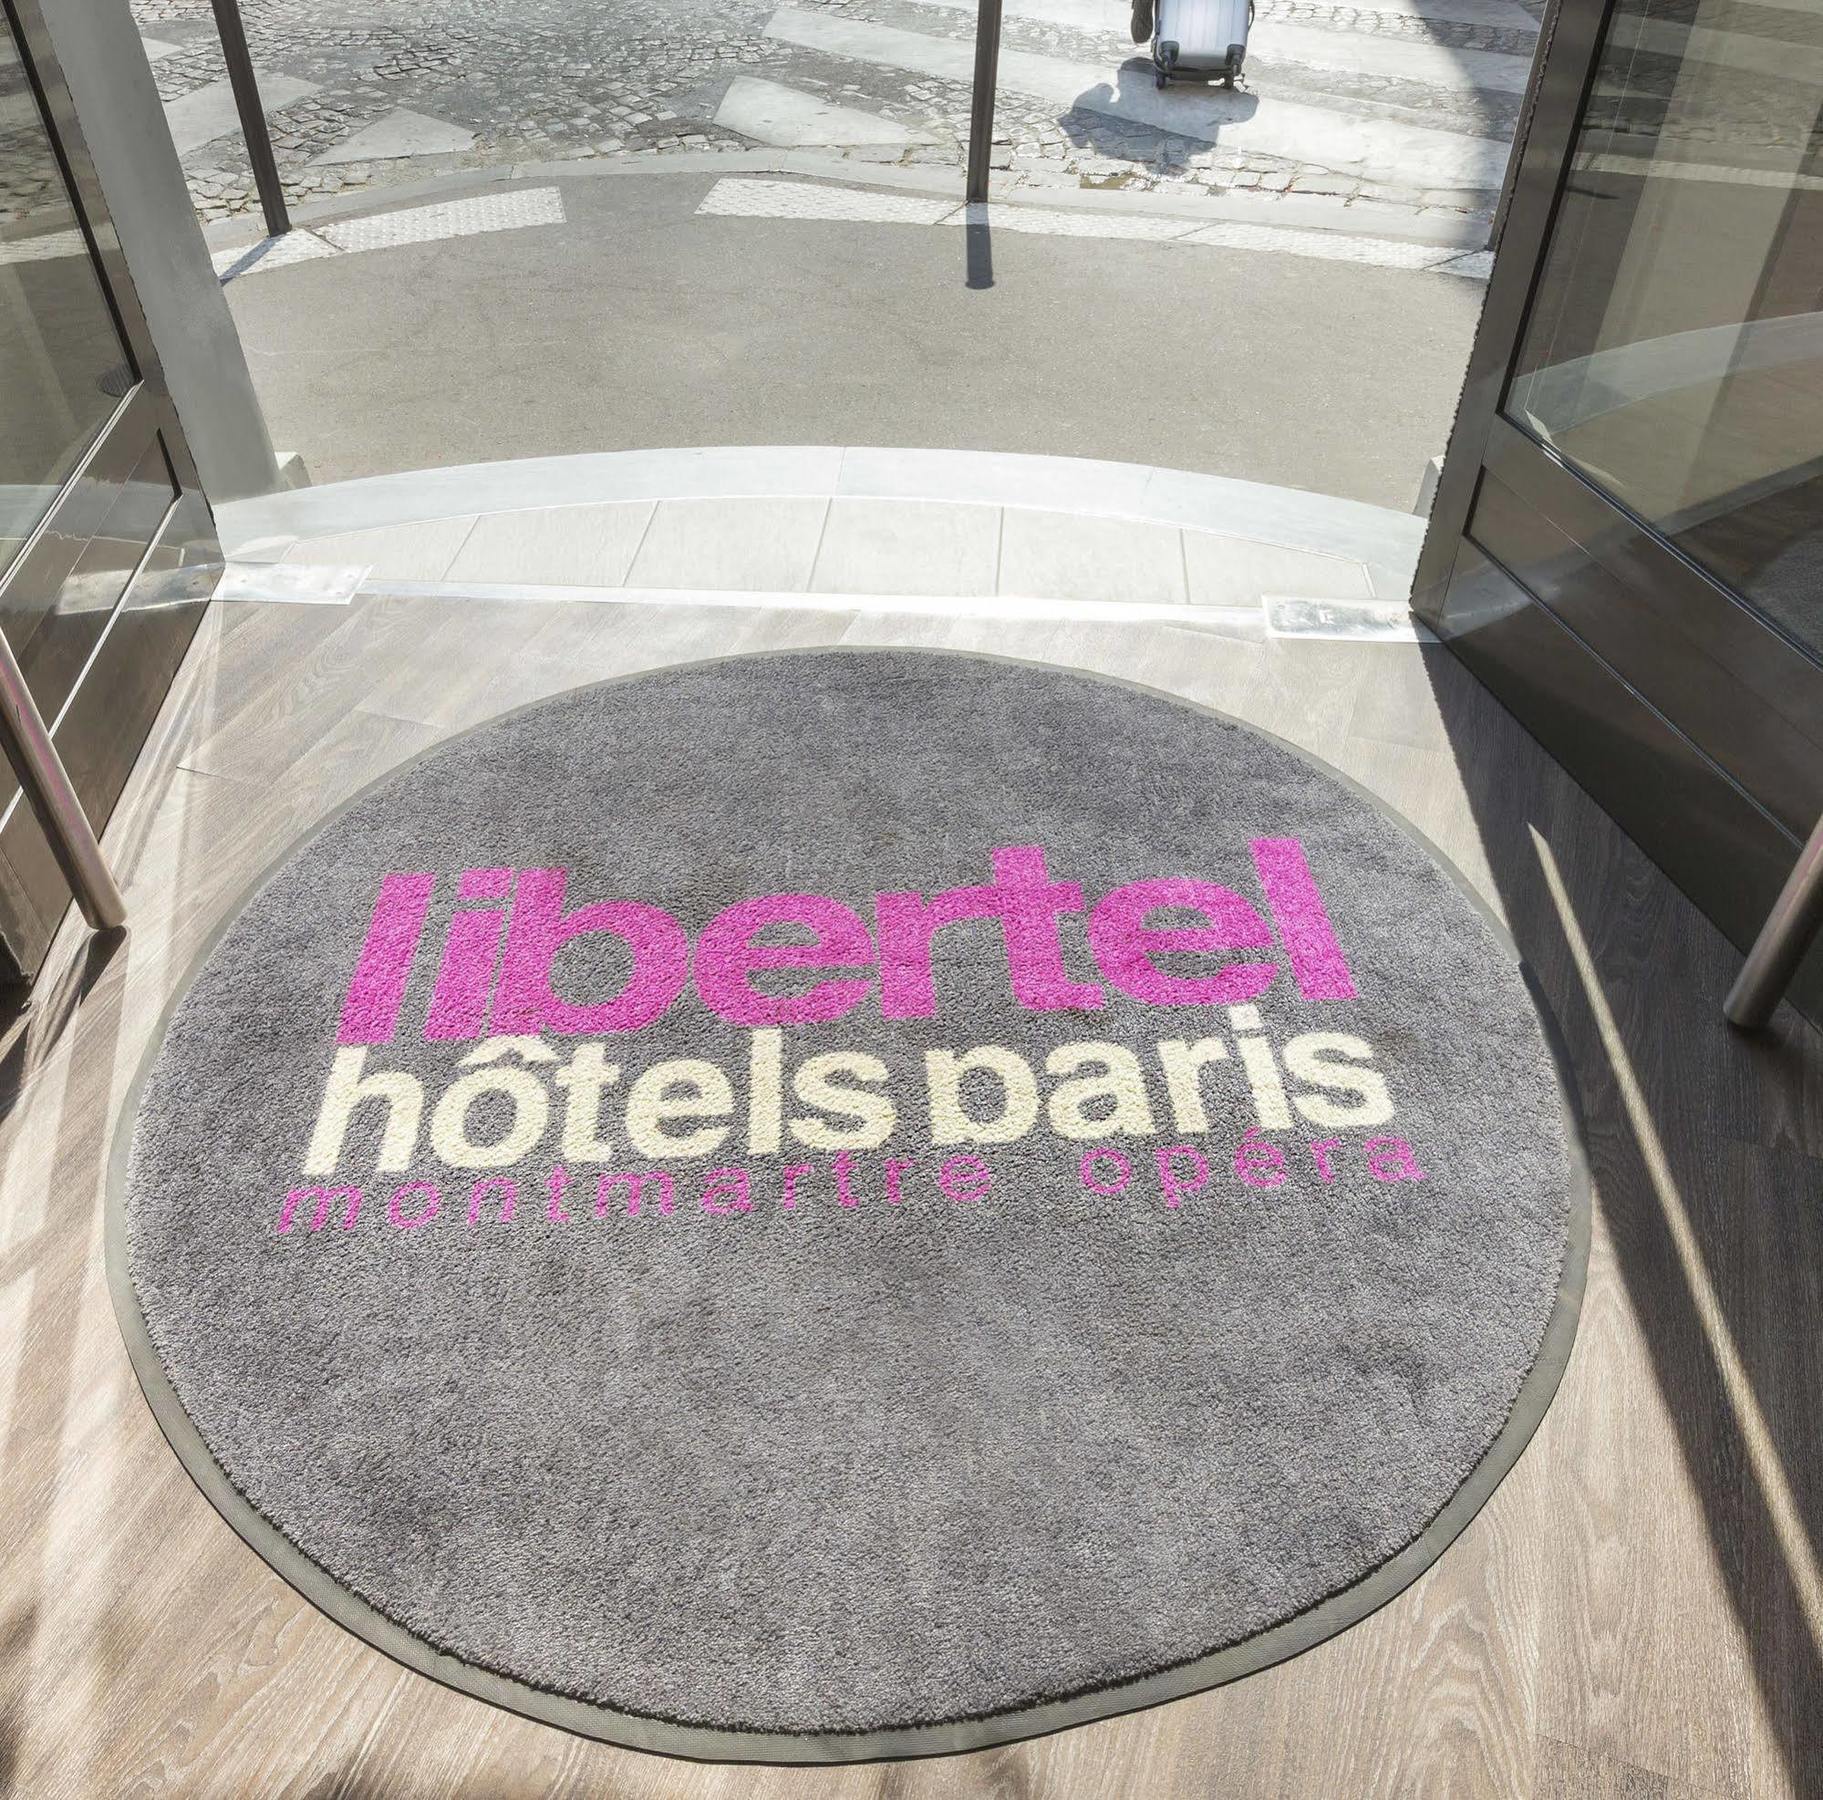 Libertel Montmartre Opera Hotel Parijs Buitenkant foto